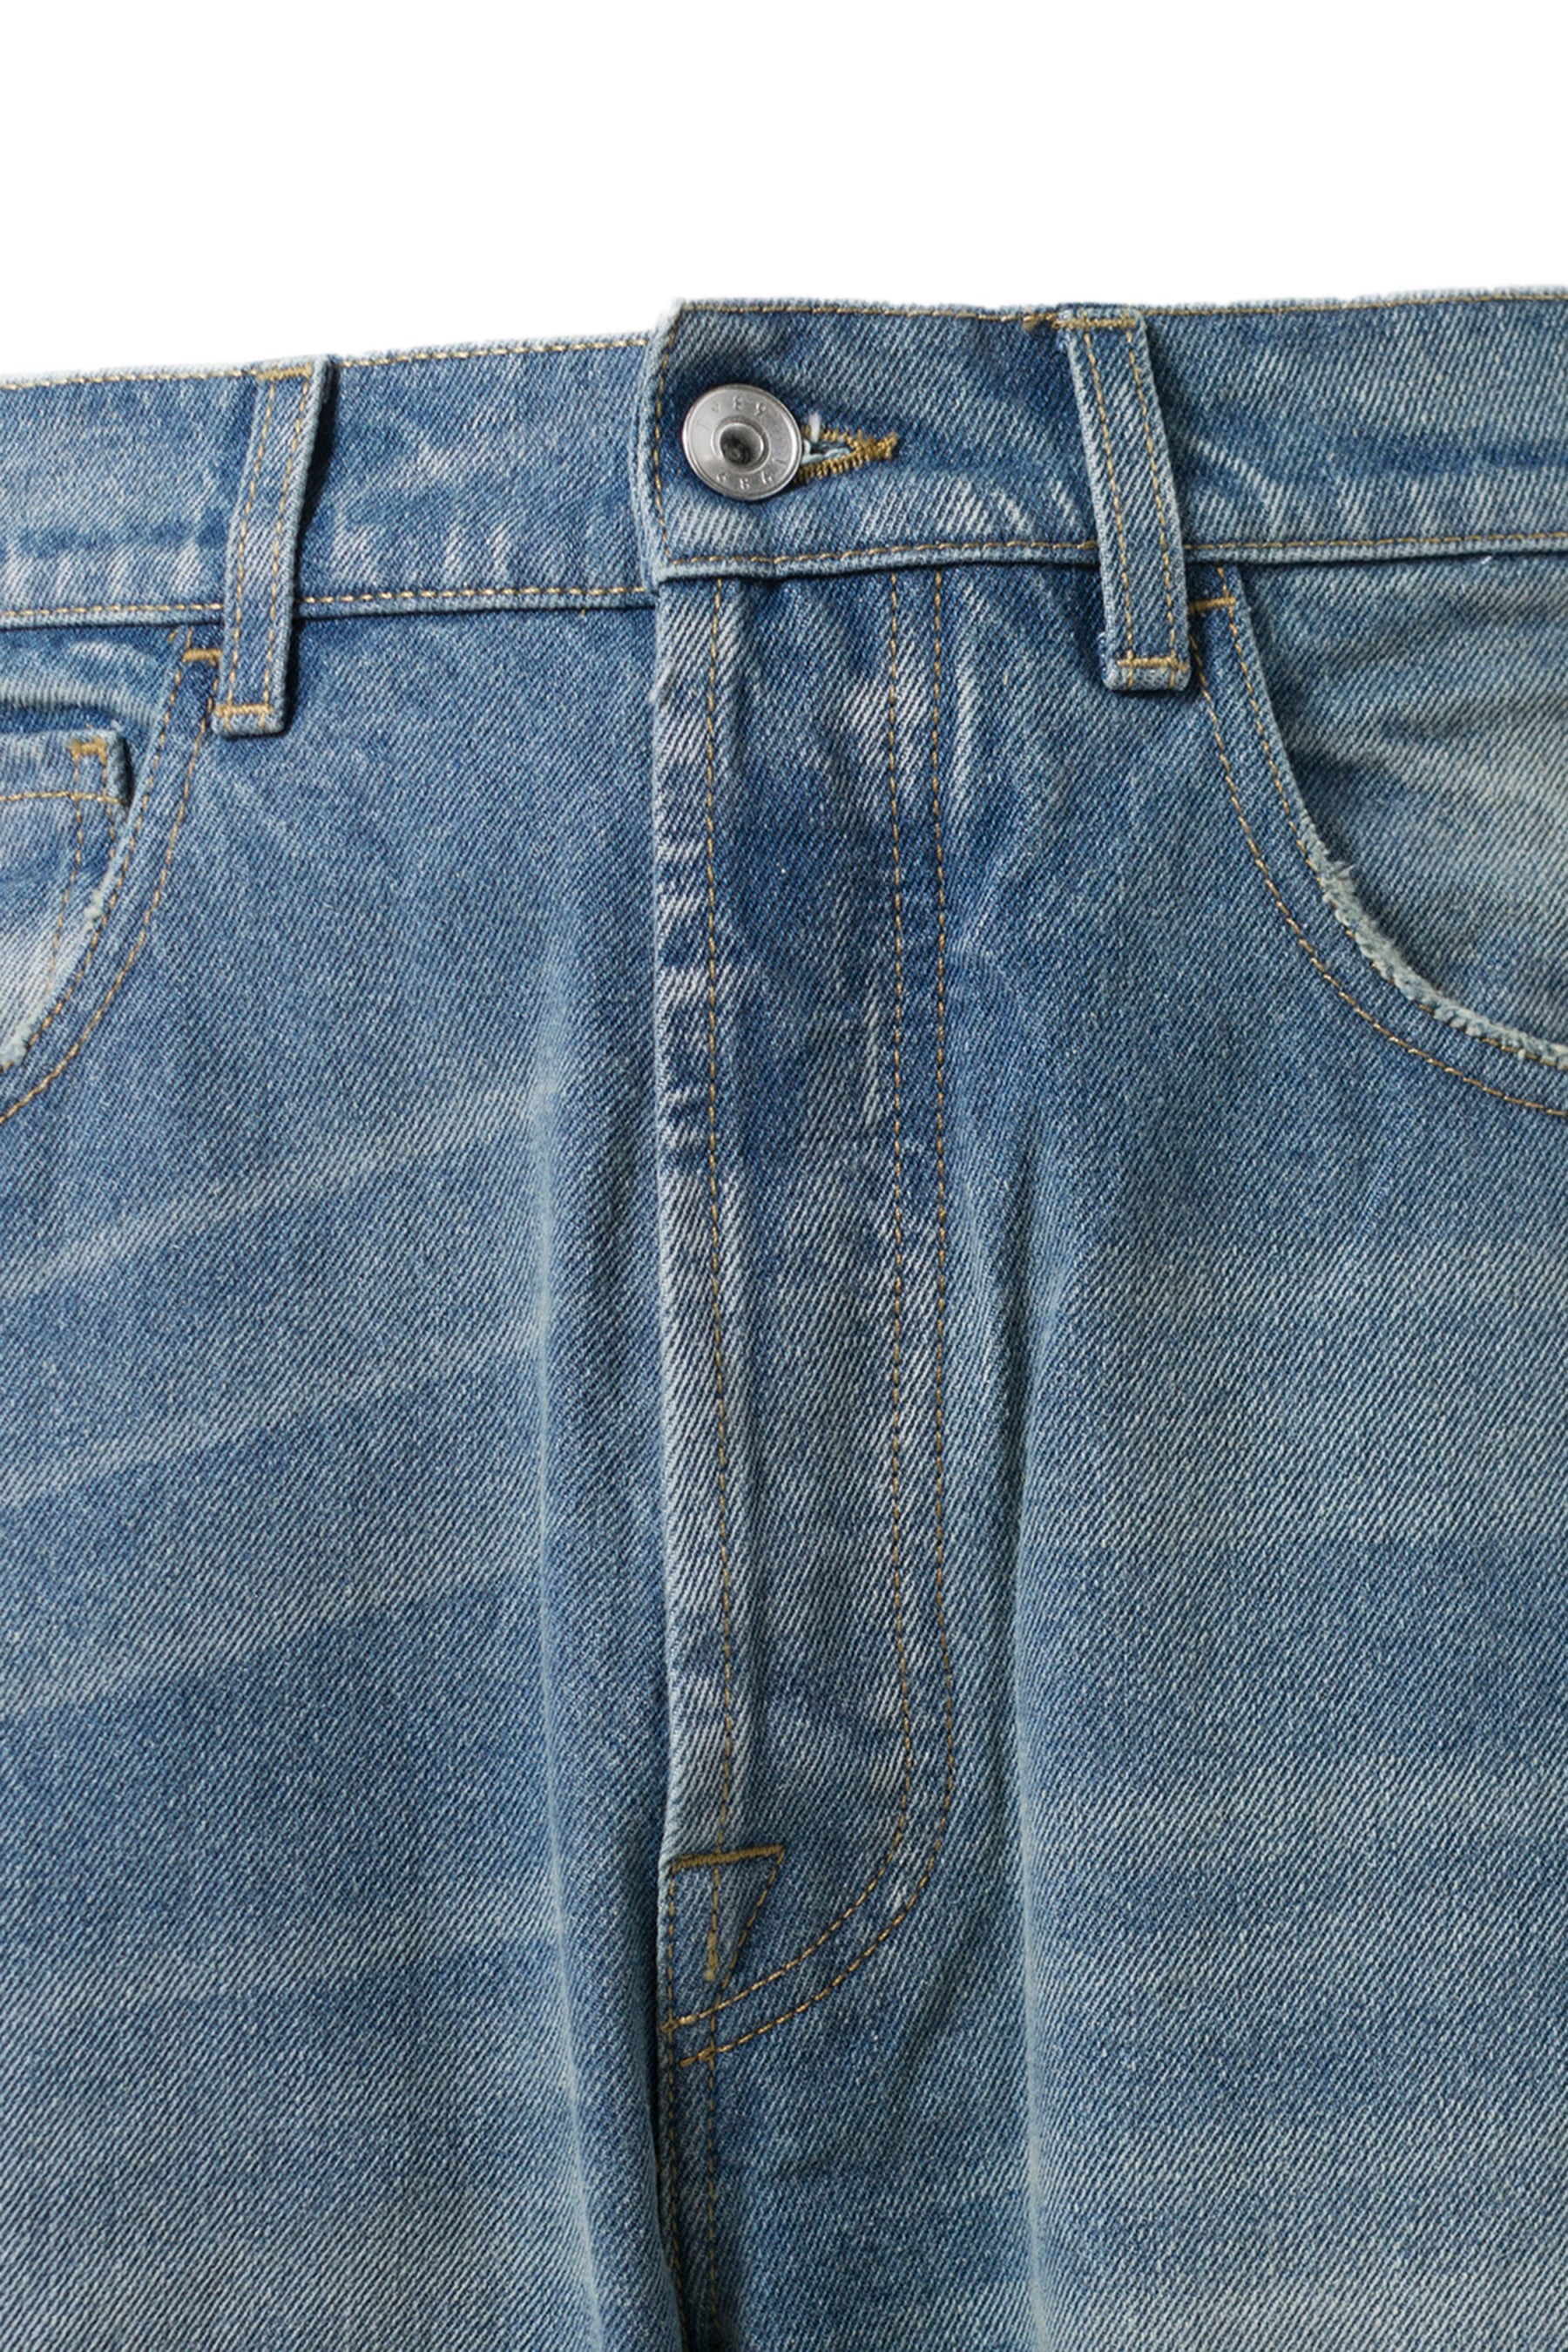 Celine - Jane Flared Jeans in Dark Union Wash Denim - Blue - Size : 29 - for Women